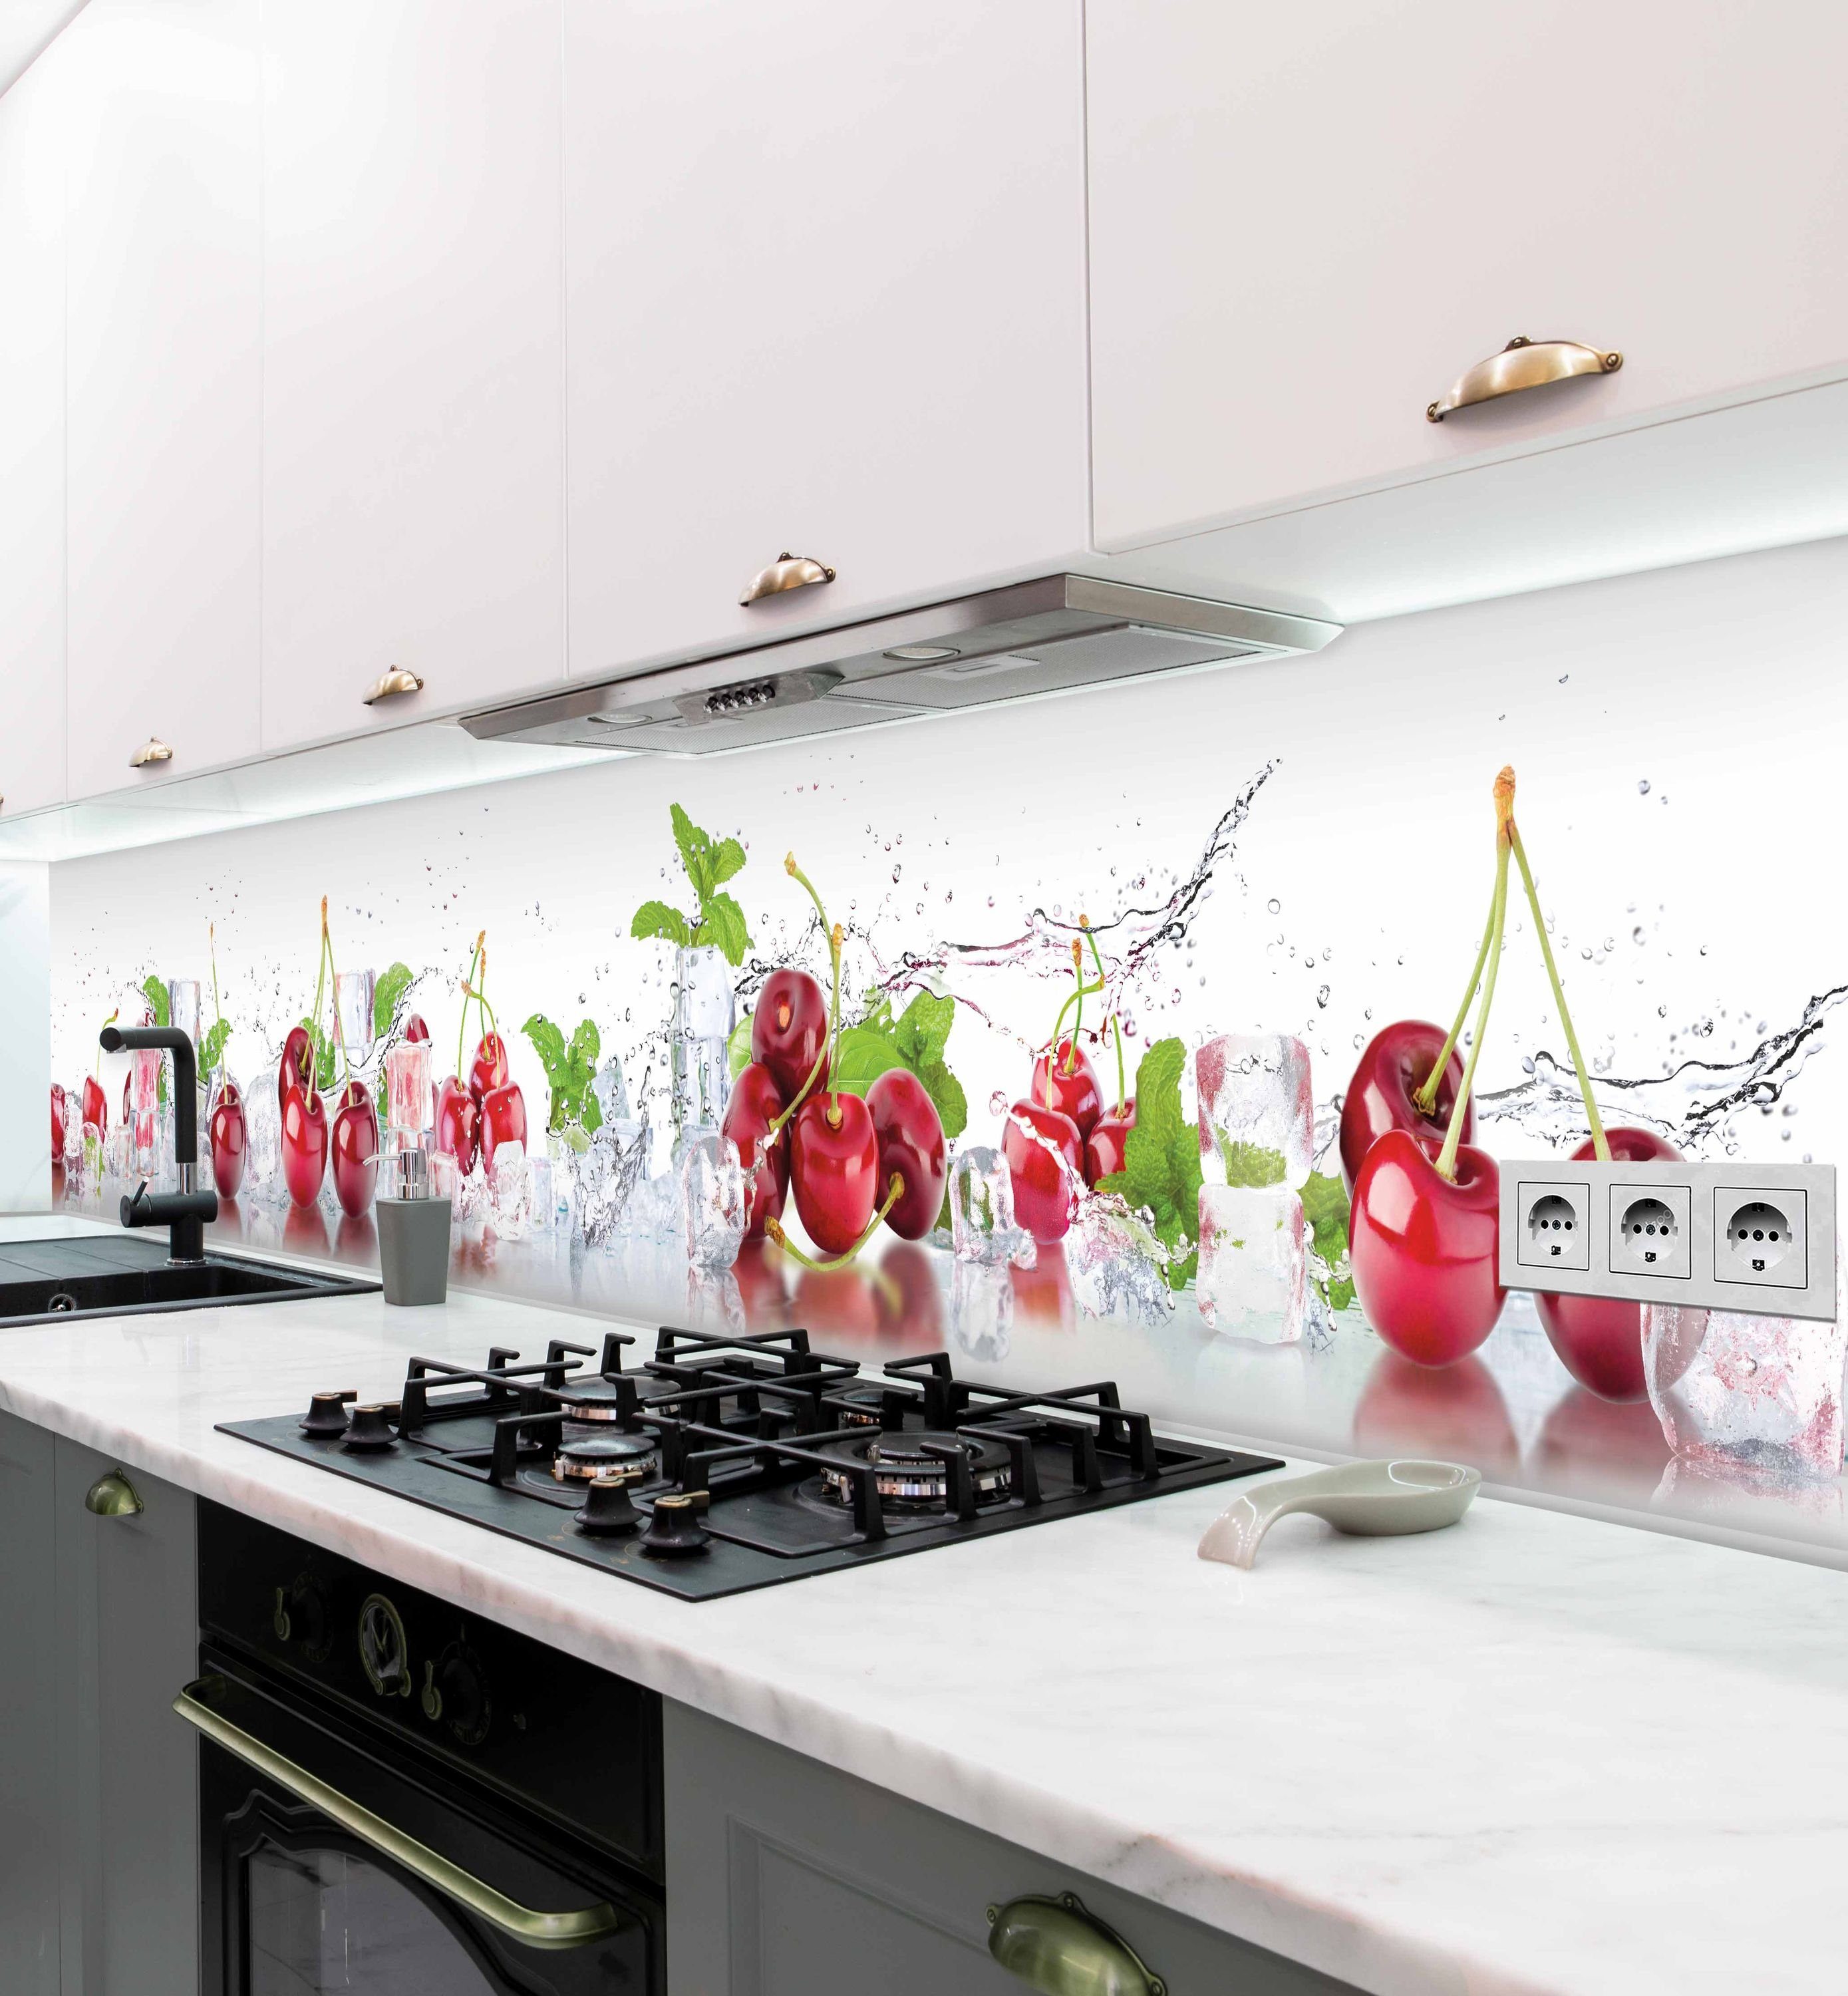 MyMaxxi Dekorationsfolie Küchenrückwand Cherry selbstklebend Spritzschutz Folie